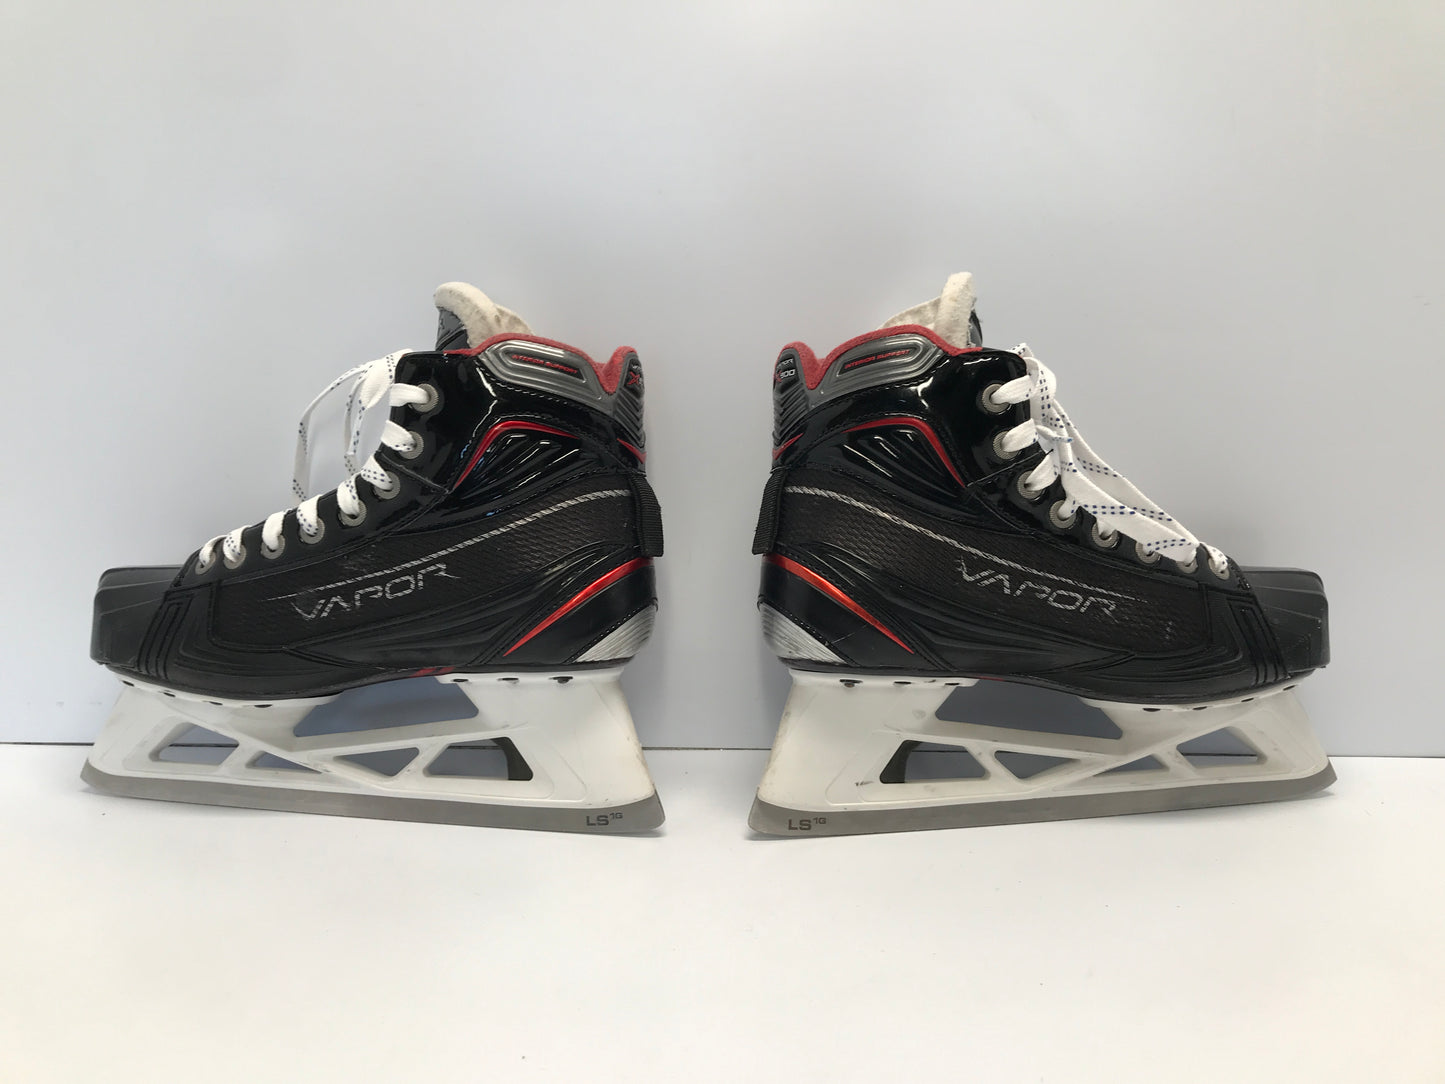 Hockey Goalie Skates Child Size Junior 6.5 Shoe Size 5.5 Skate Size Bauer Vapor X 900 Excellent